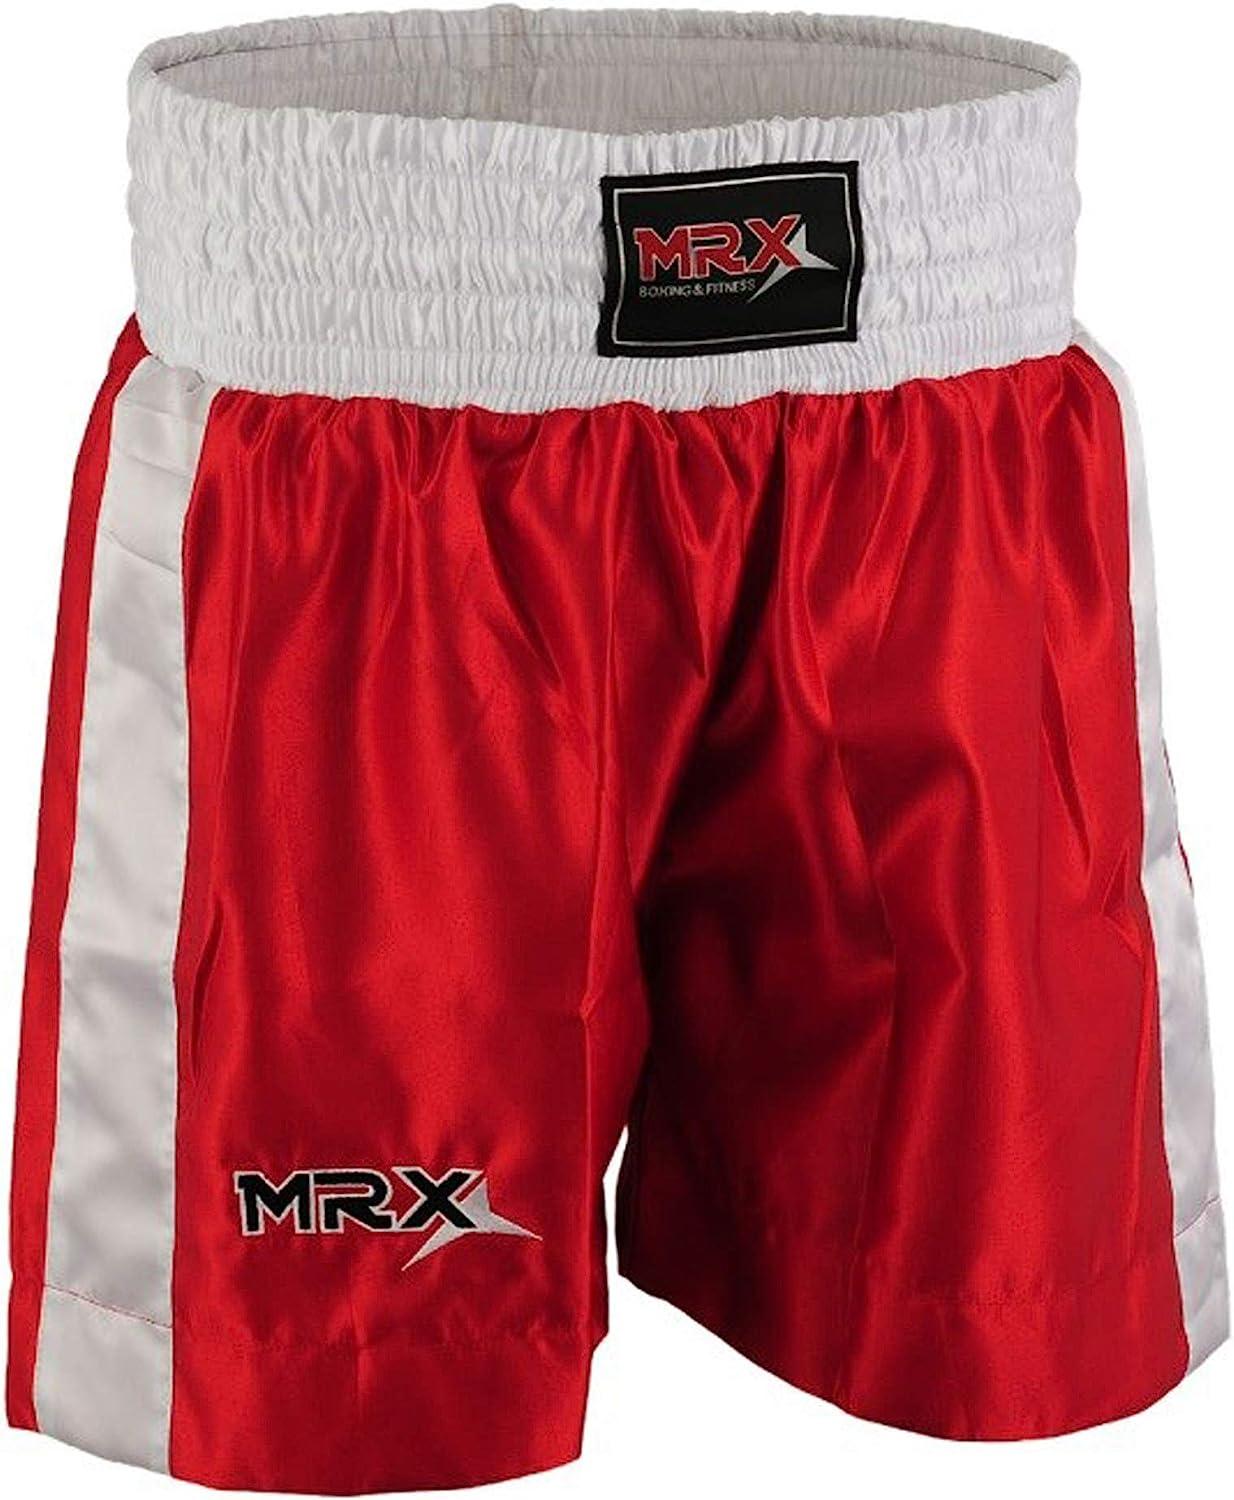 MRX MMA Training UFC Shorts Cage Fighting Grappling Martial Arts Boxing  Muay Thai Short.